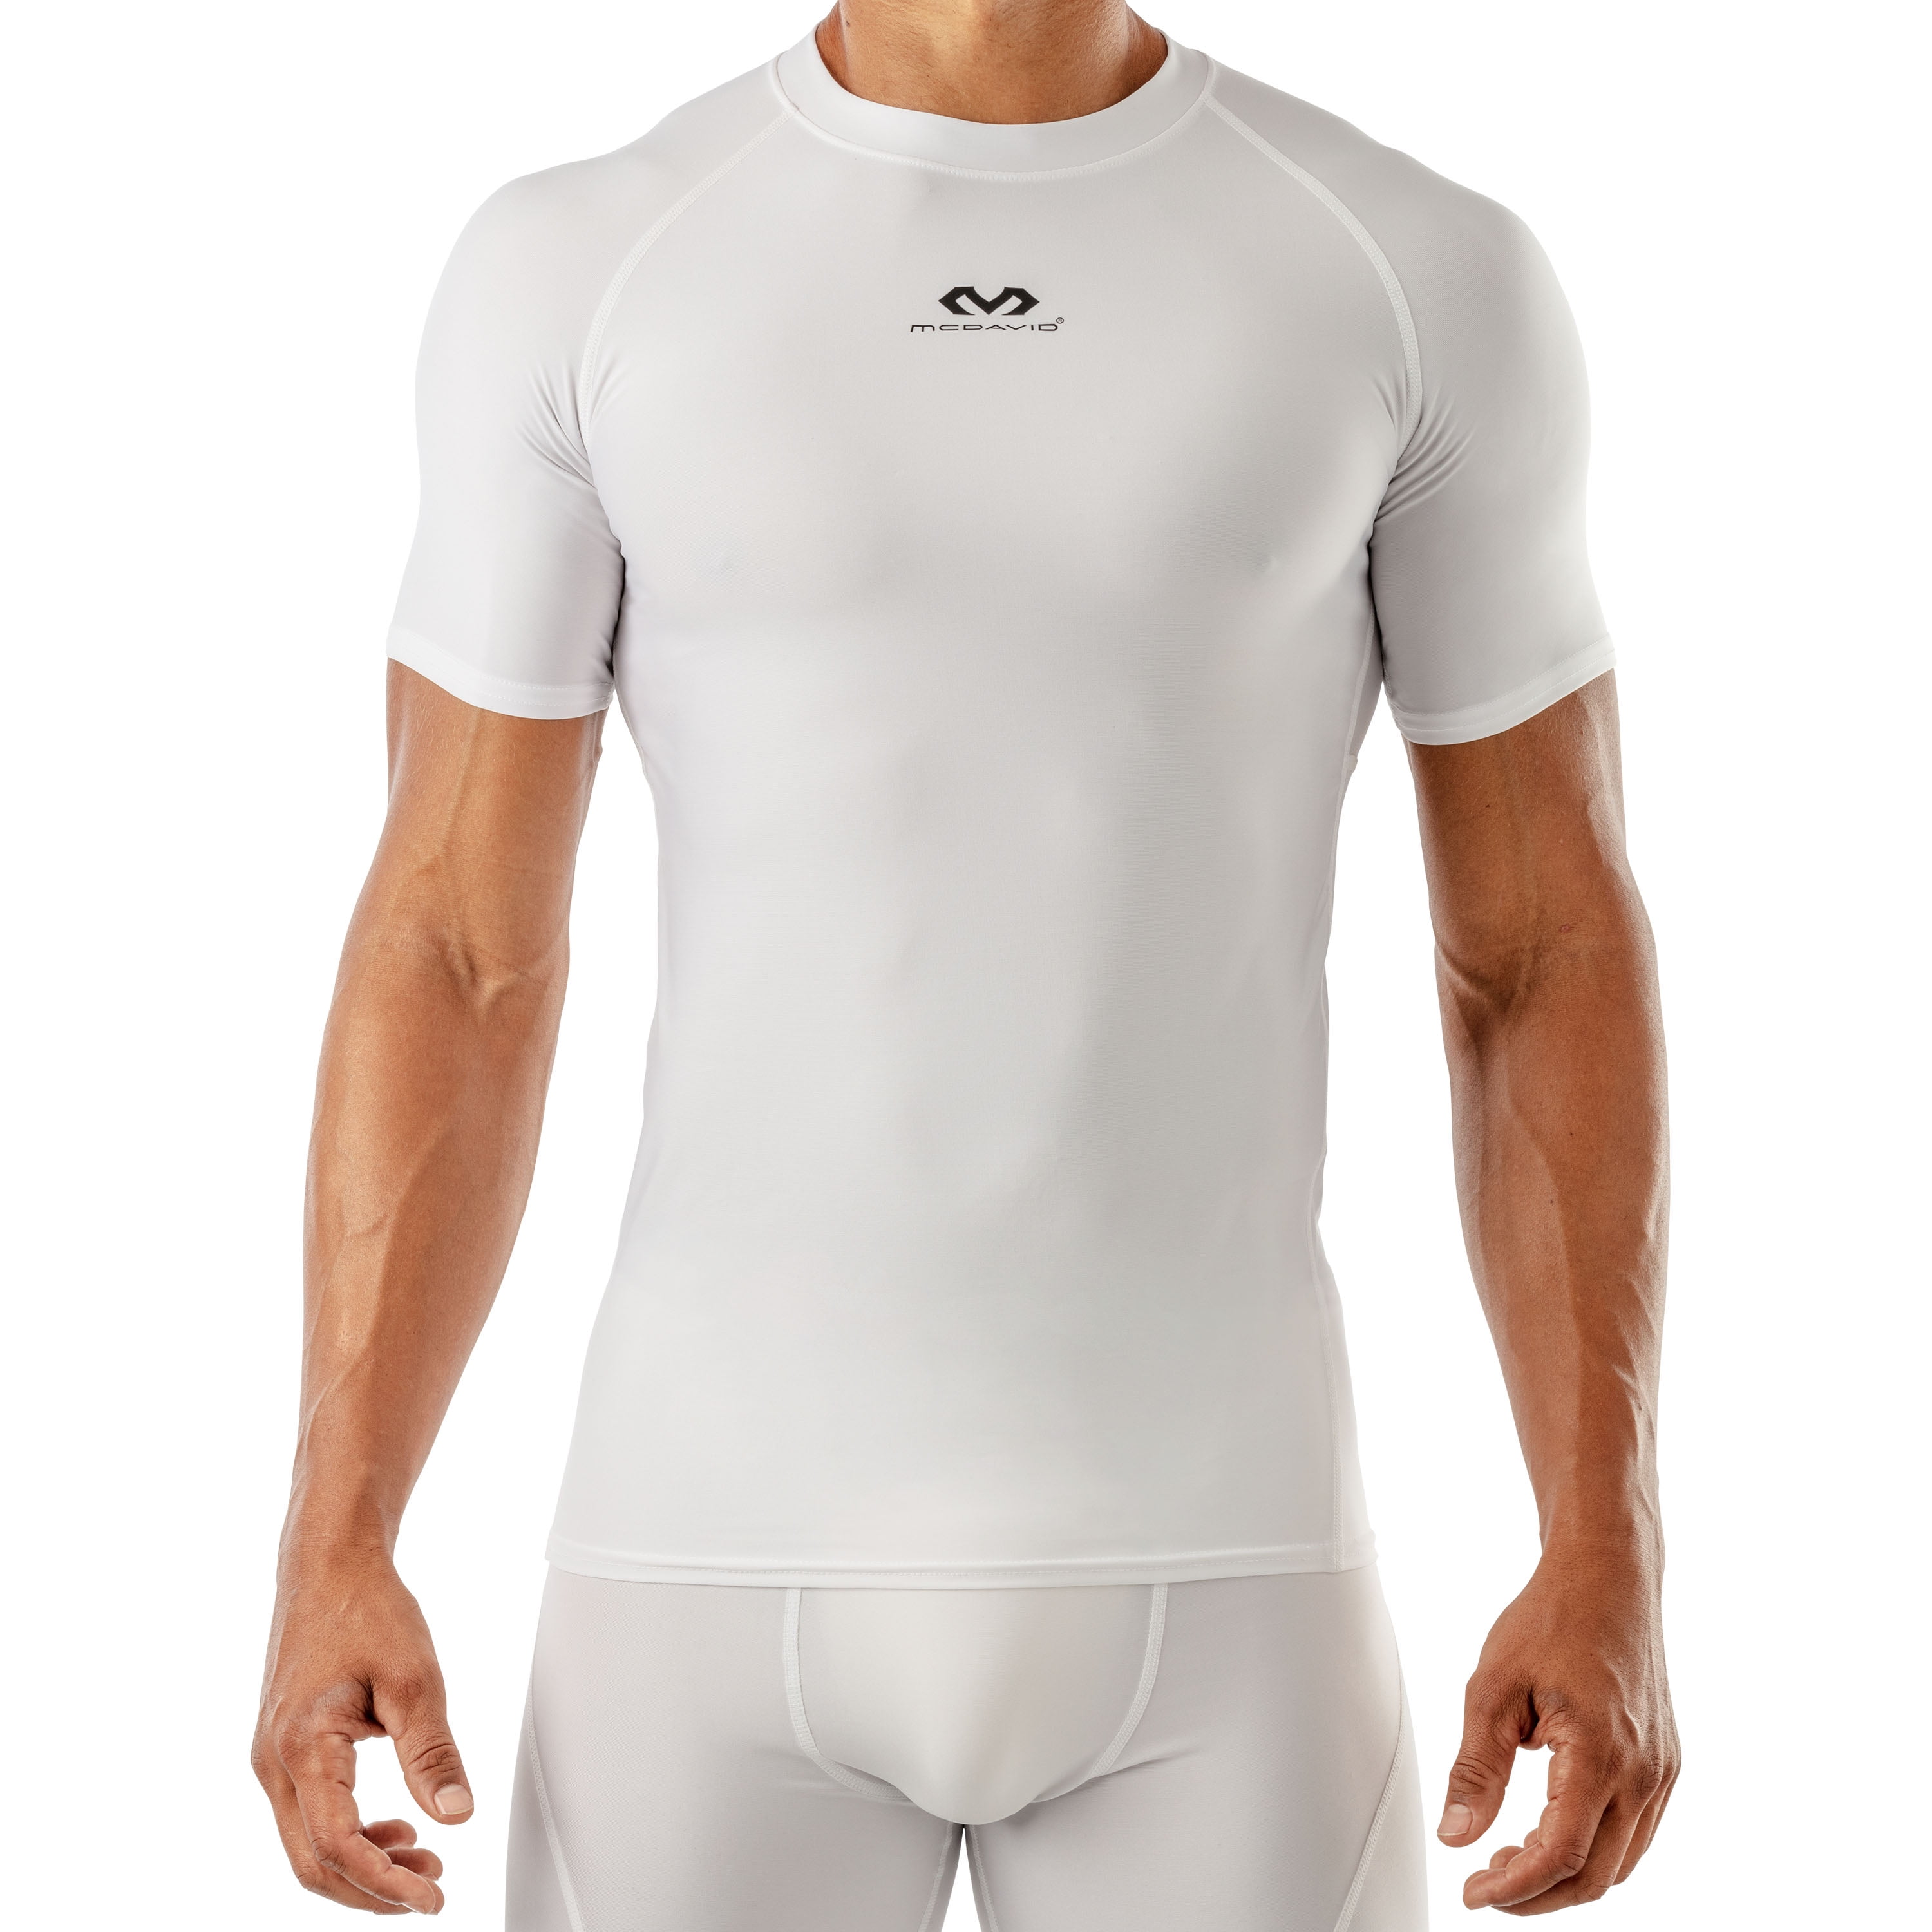 Uændret straf vold McDavid Sport Compression Shirt With Short Sleeves, White, Adult Small -  Walmart.com